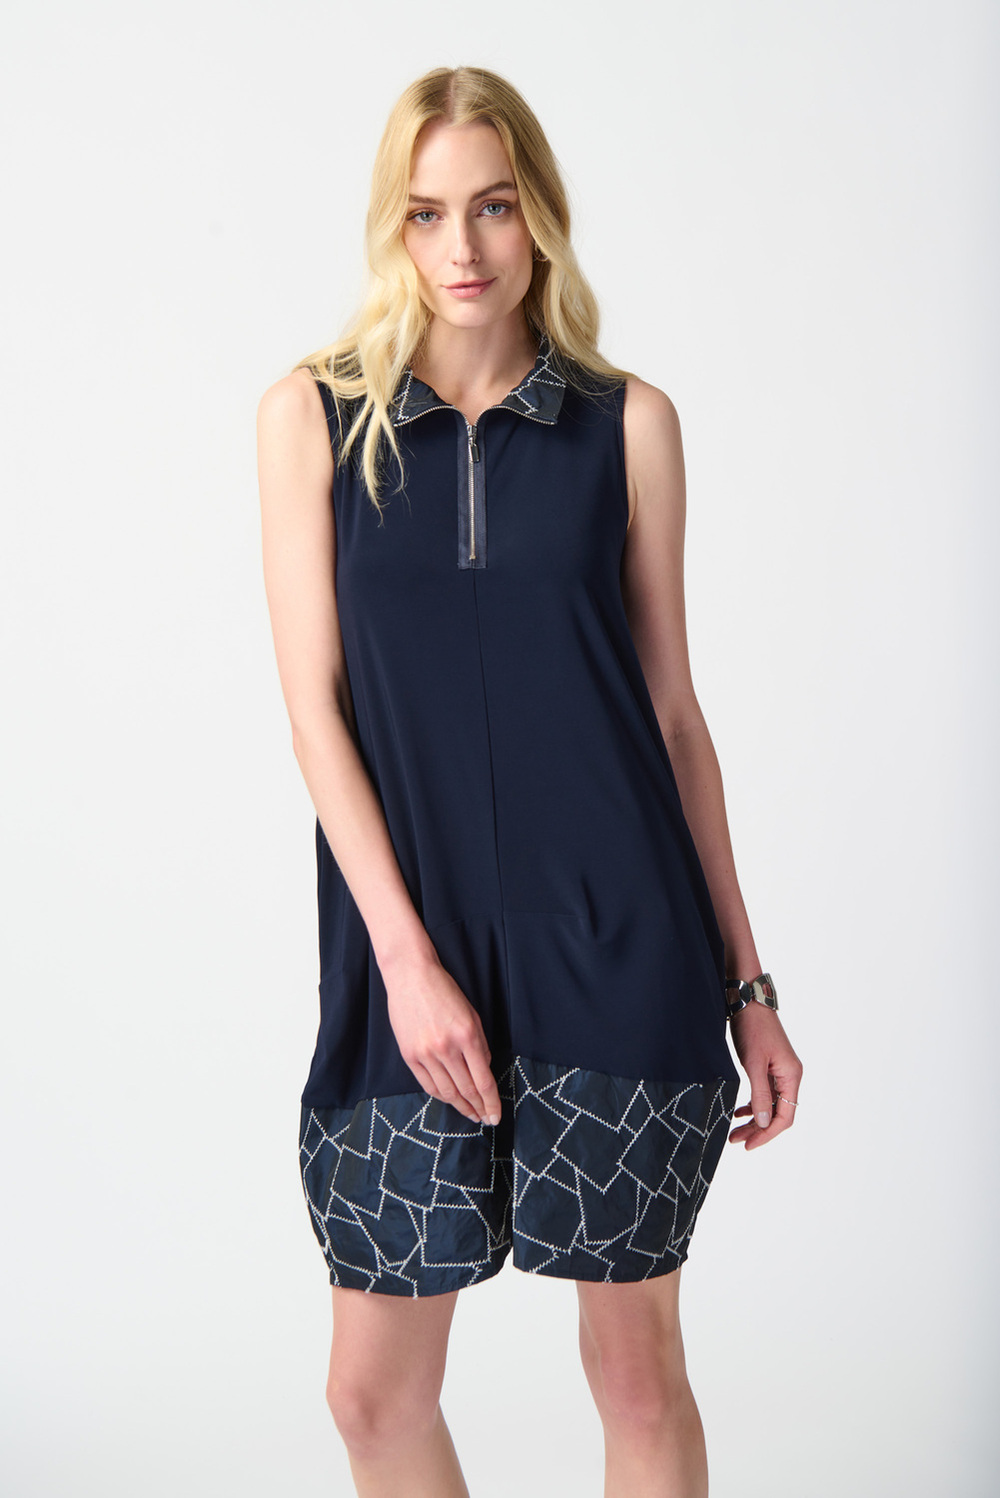 Dual Fabric Square Motif Dress Style 241157. Midnight Blue/white